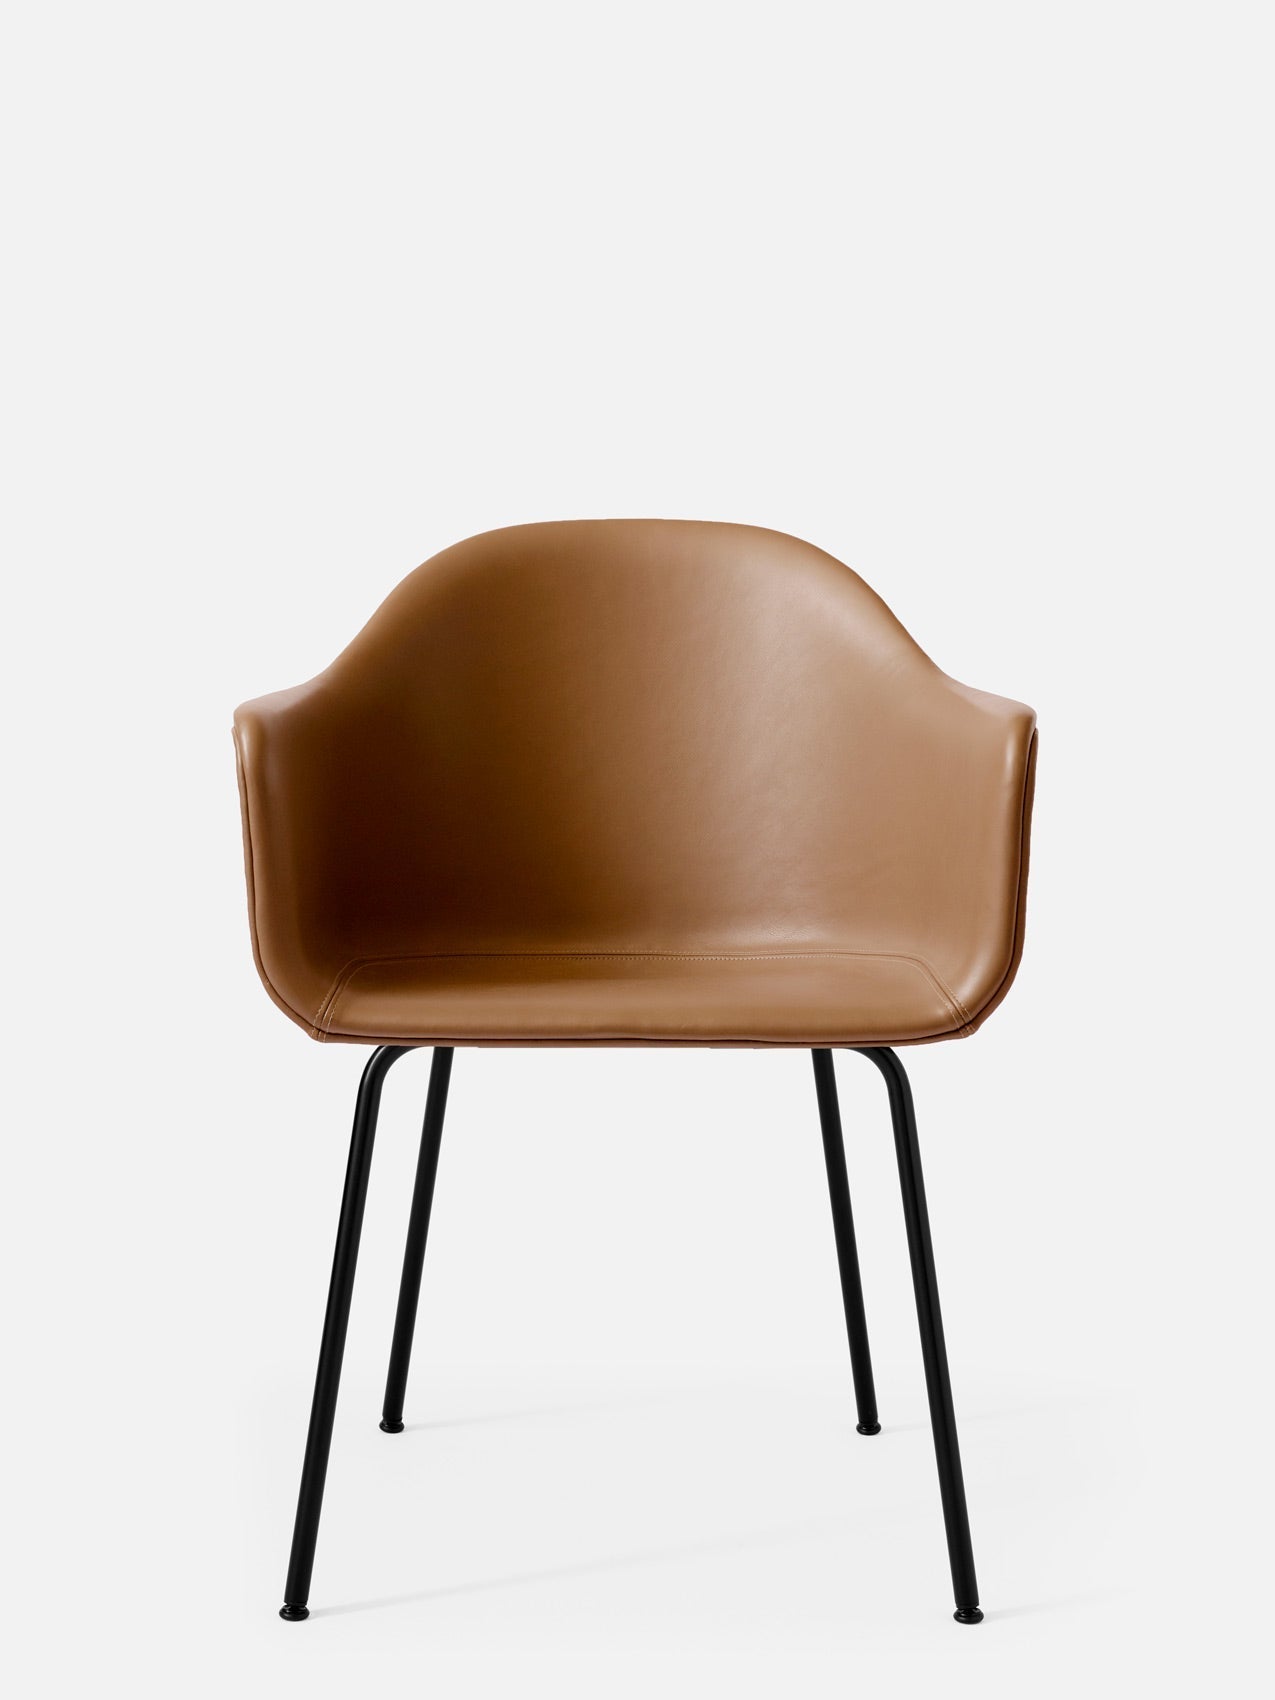 Harbour Arm Chair, Upholstered-Chair-Norm Architects-Black Steel-0250 Cognac/Dakar-menu-minimalist-modern-danish-design-home-decor